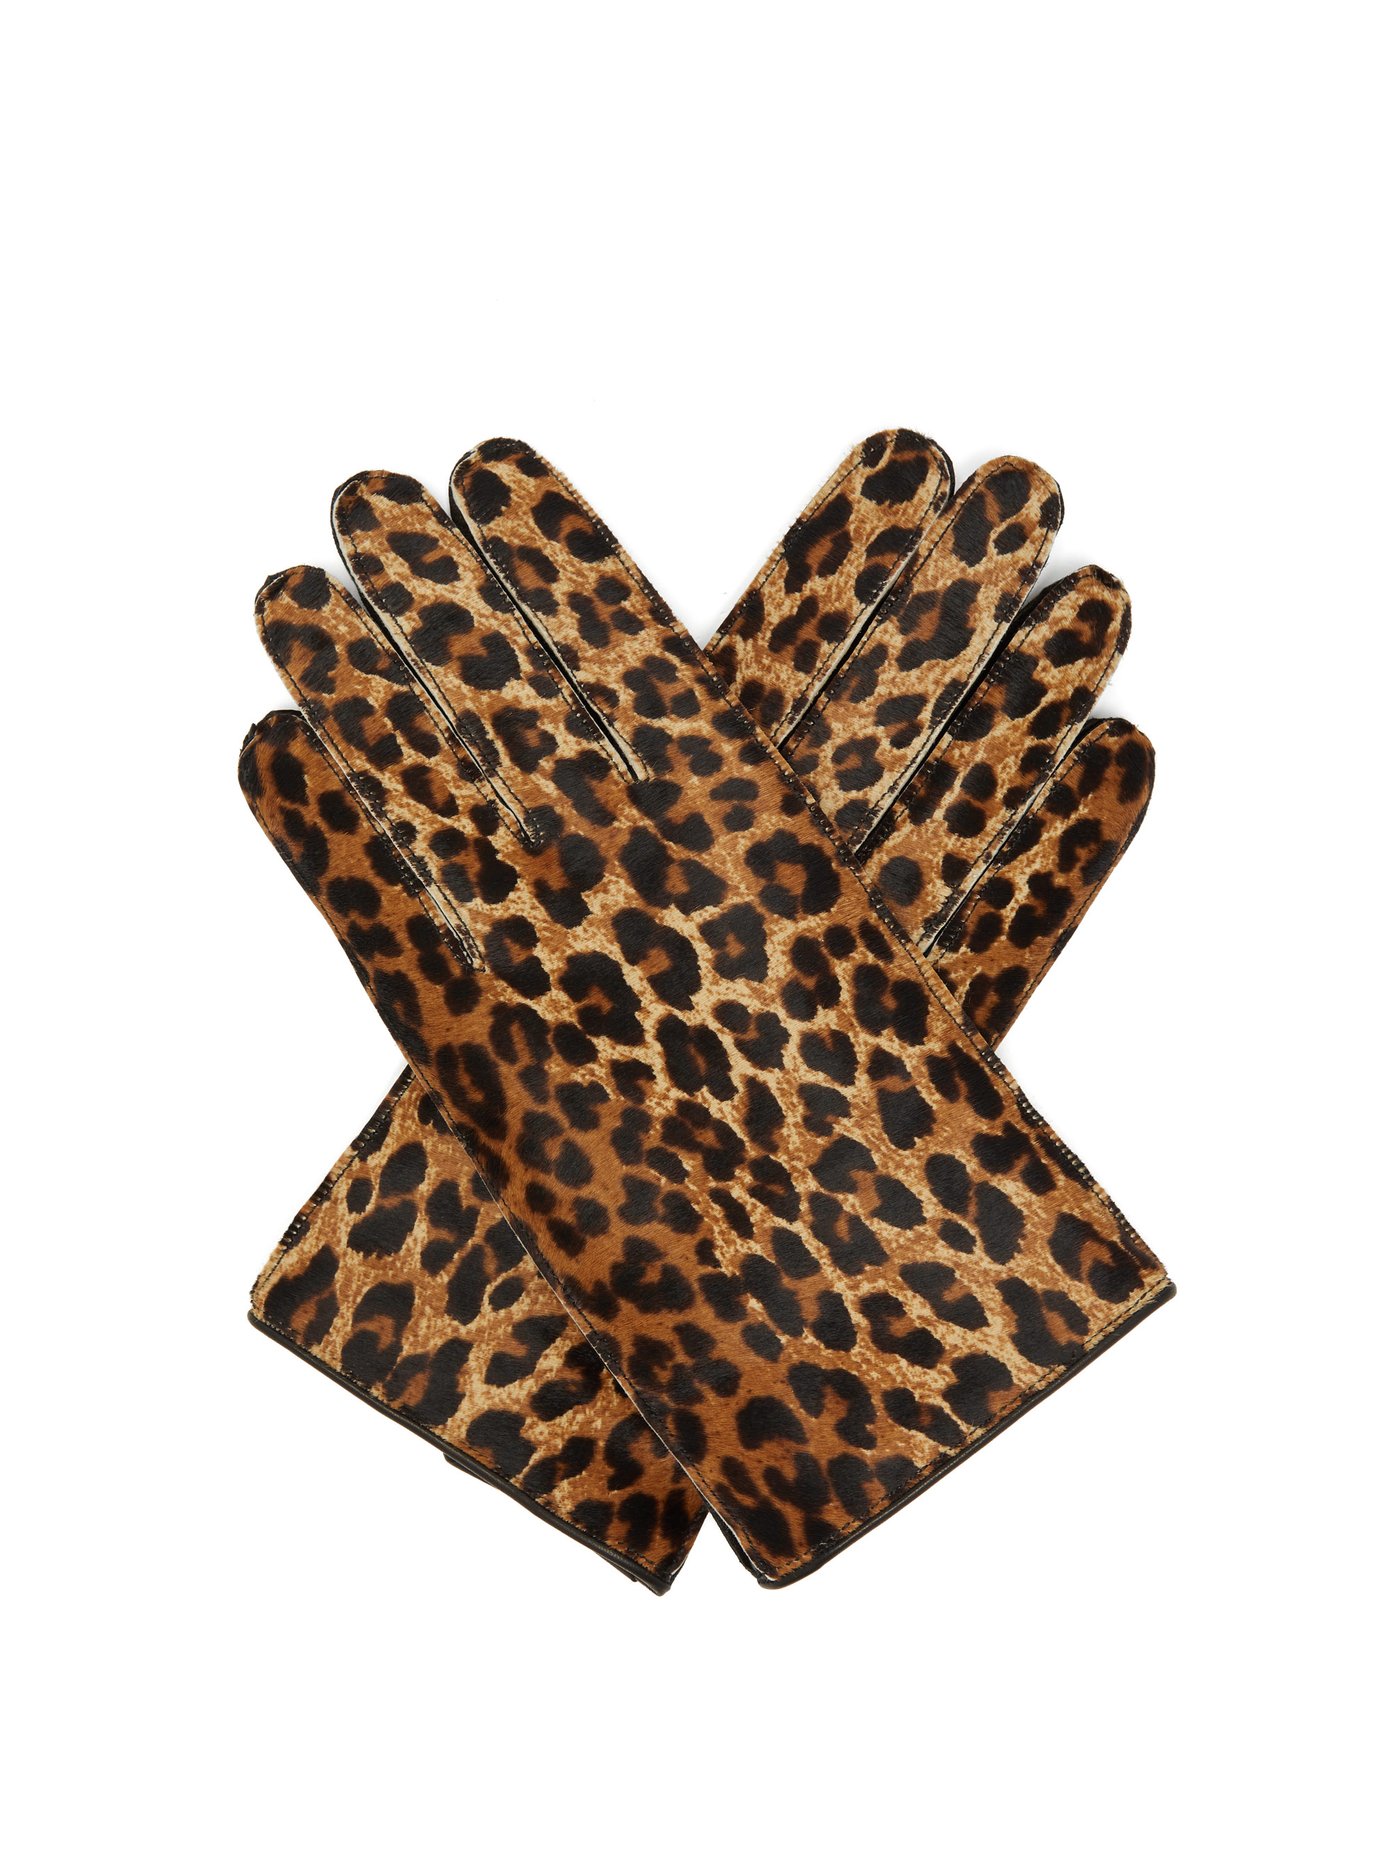 leopard gloves